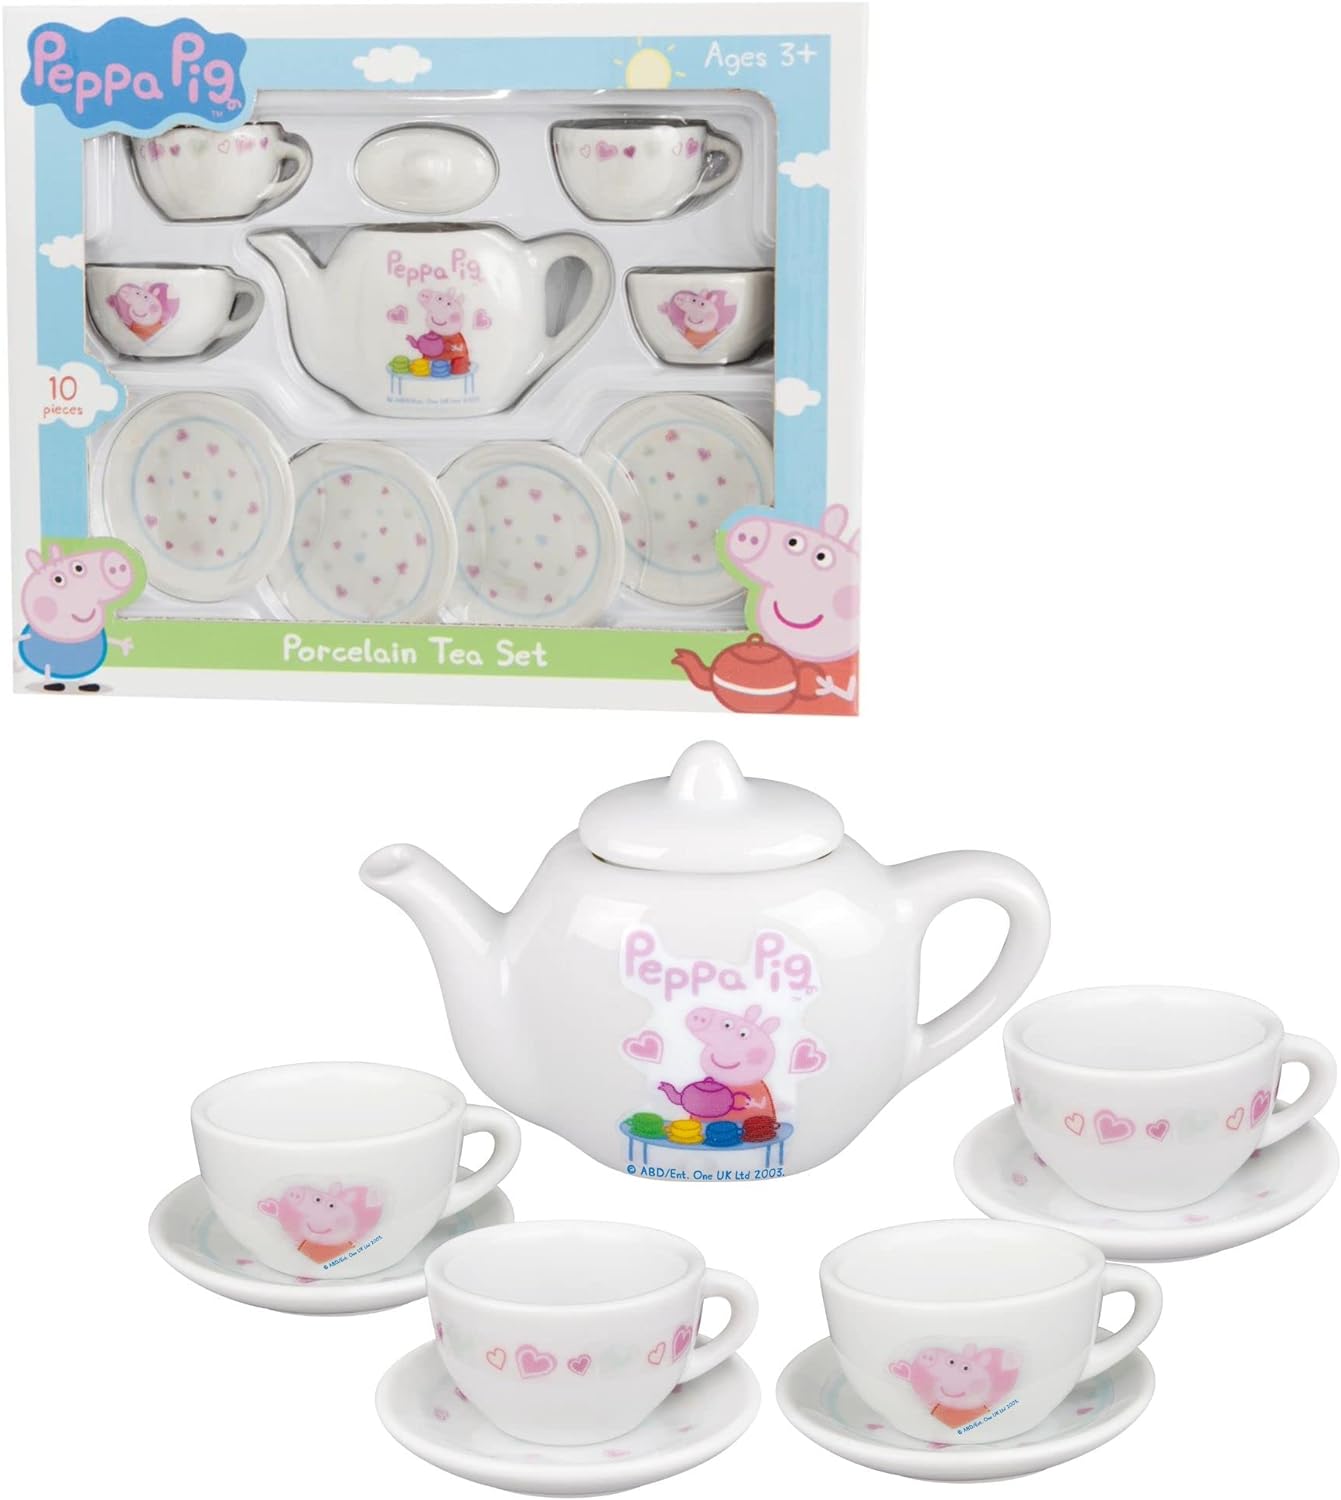 Peppa Pig Porcelain Tea Set Pretend 10 Piece Afternoon Tea Playset